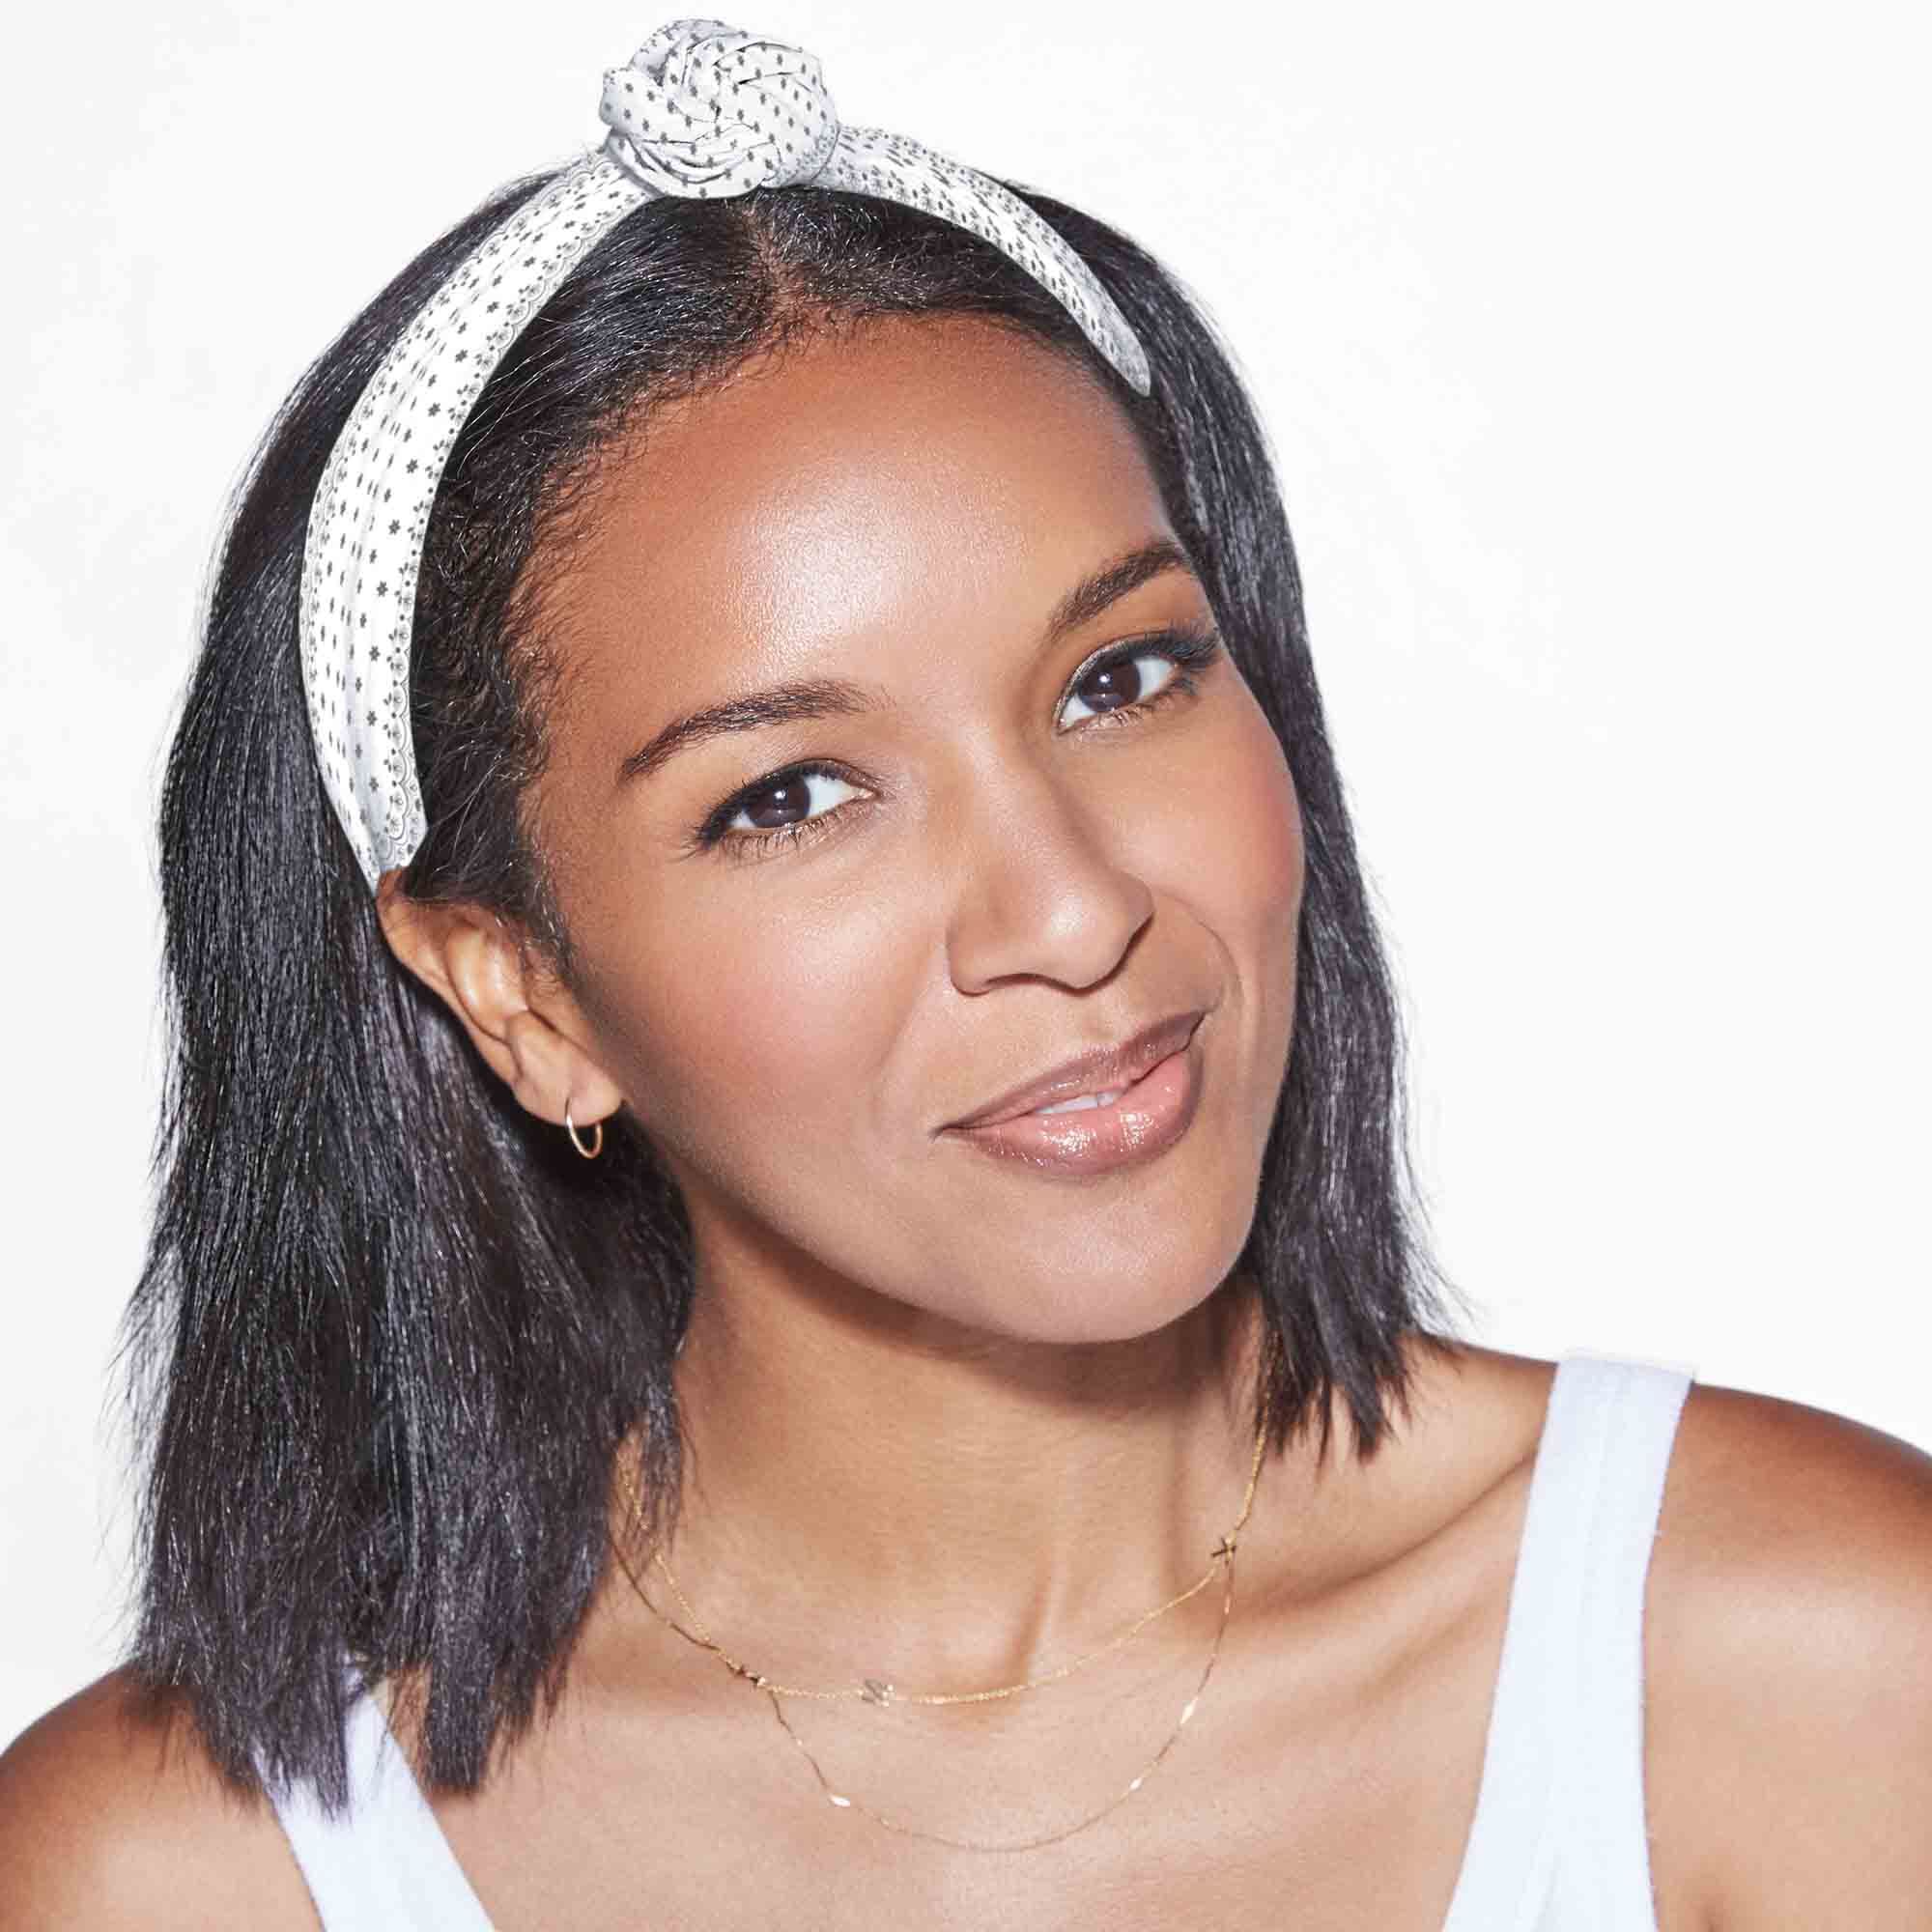 15 Cool Headbands & Head Wraps For Girls & Women